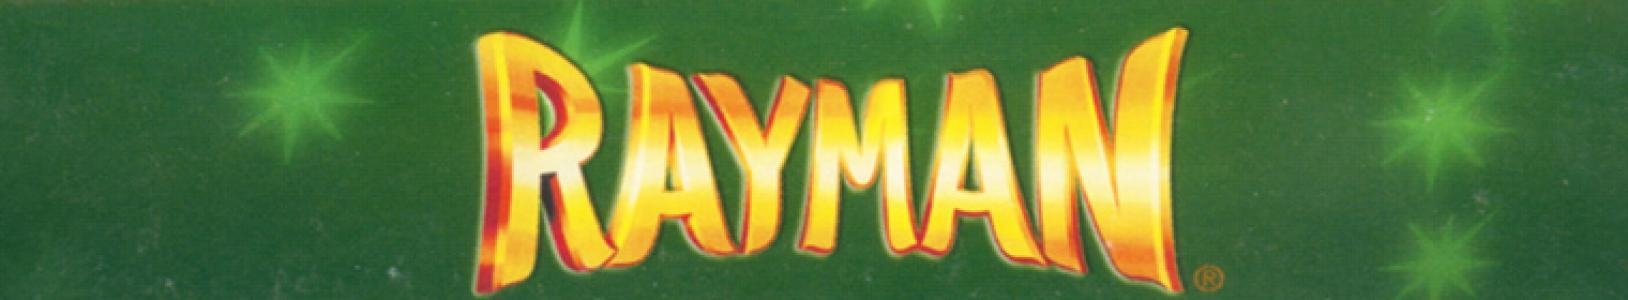 Rayman banner